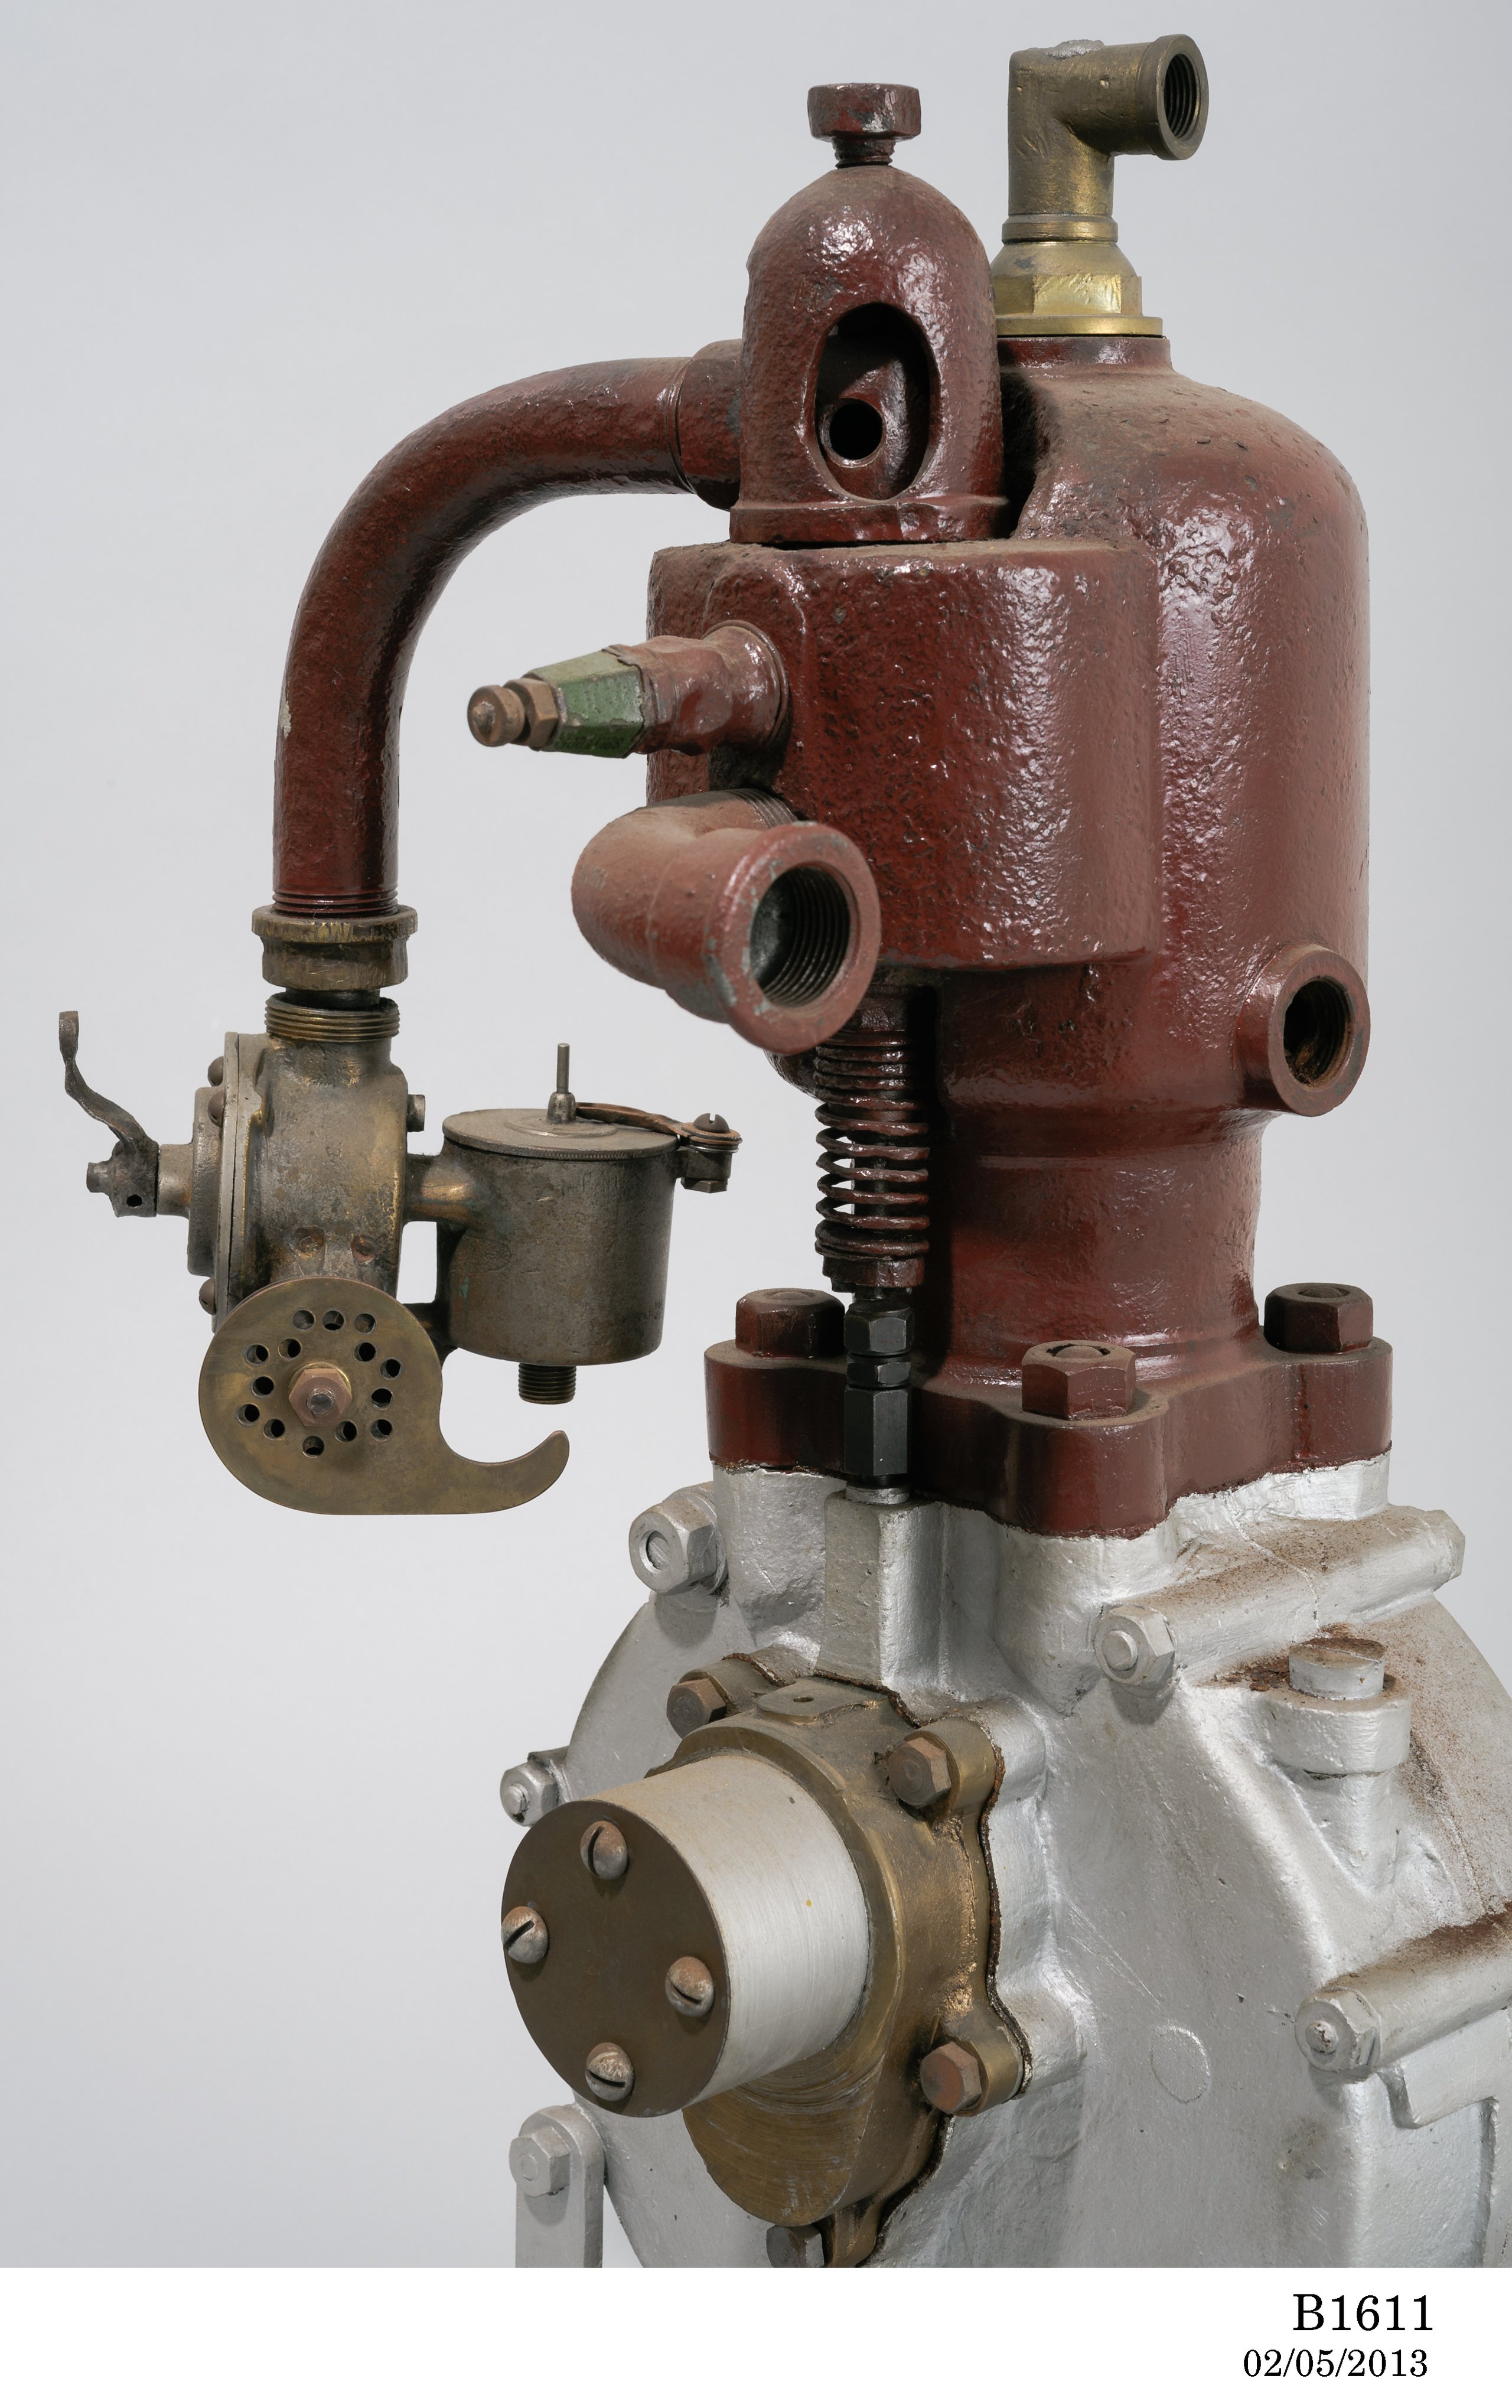 Australis motor car engine, 1900